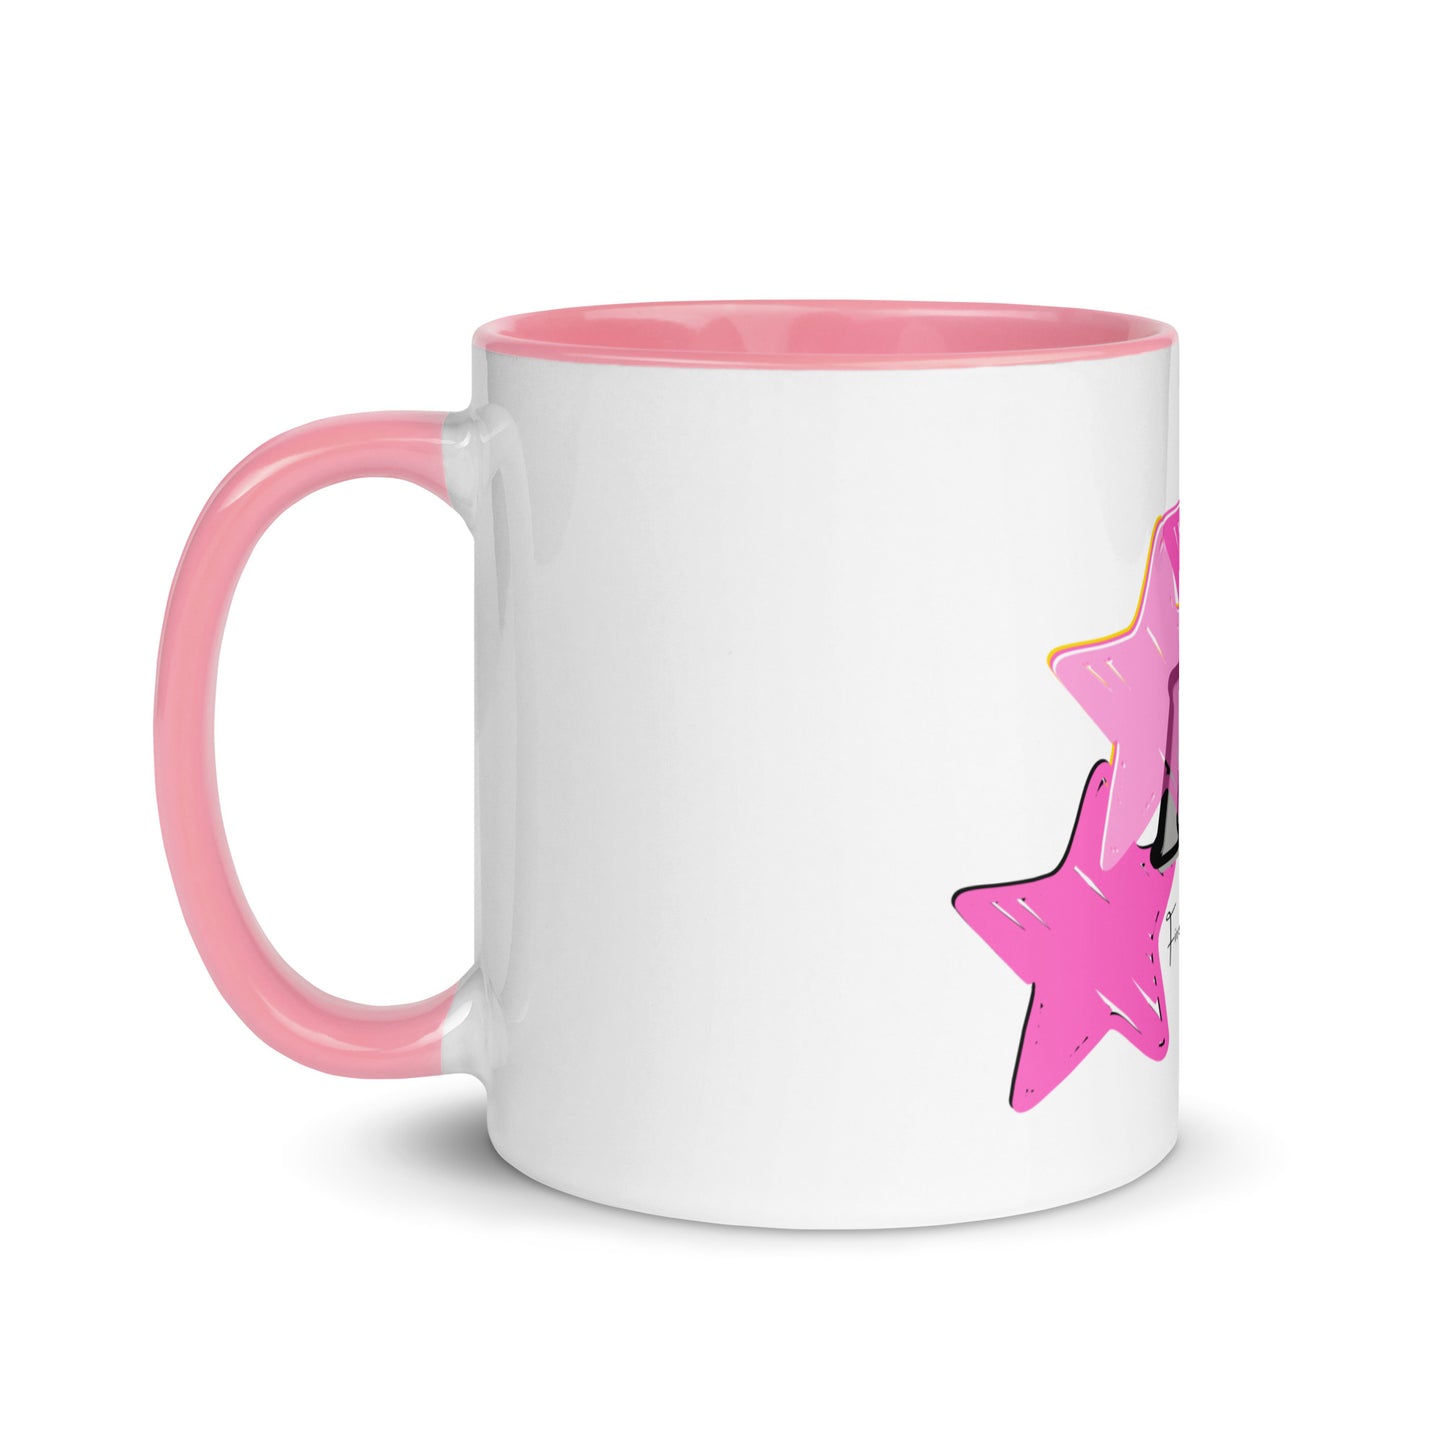 'Pink' Big Star - Five Star Fresh Mug with Color Inside